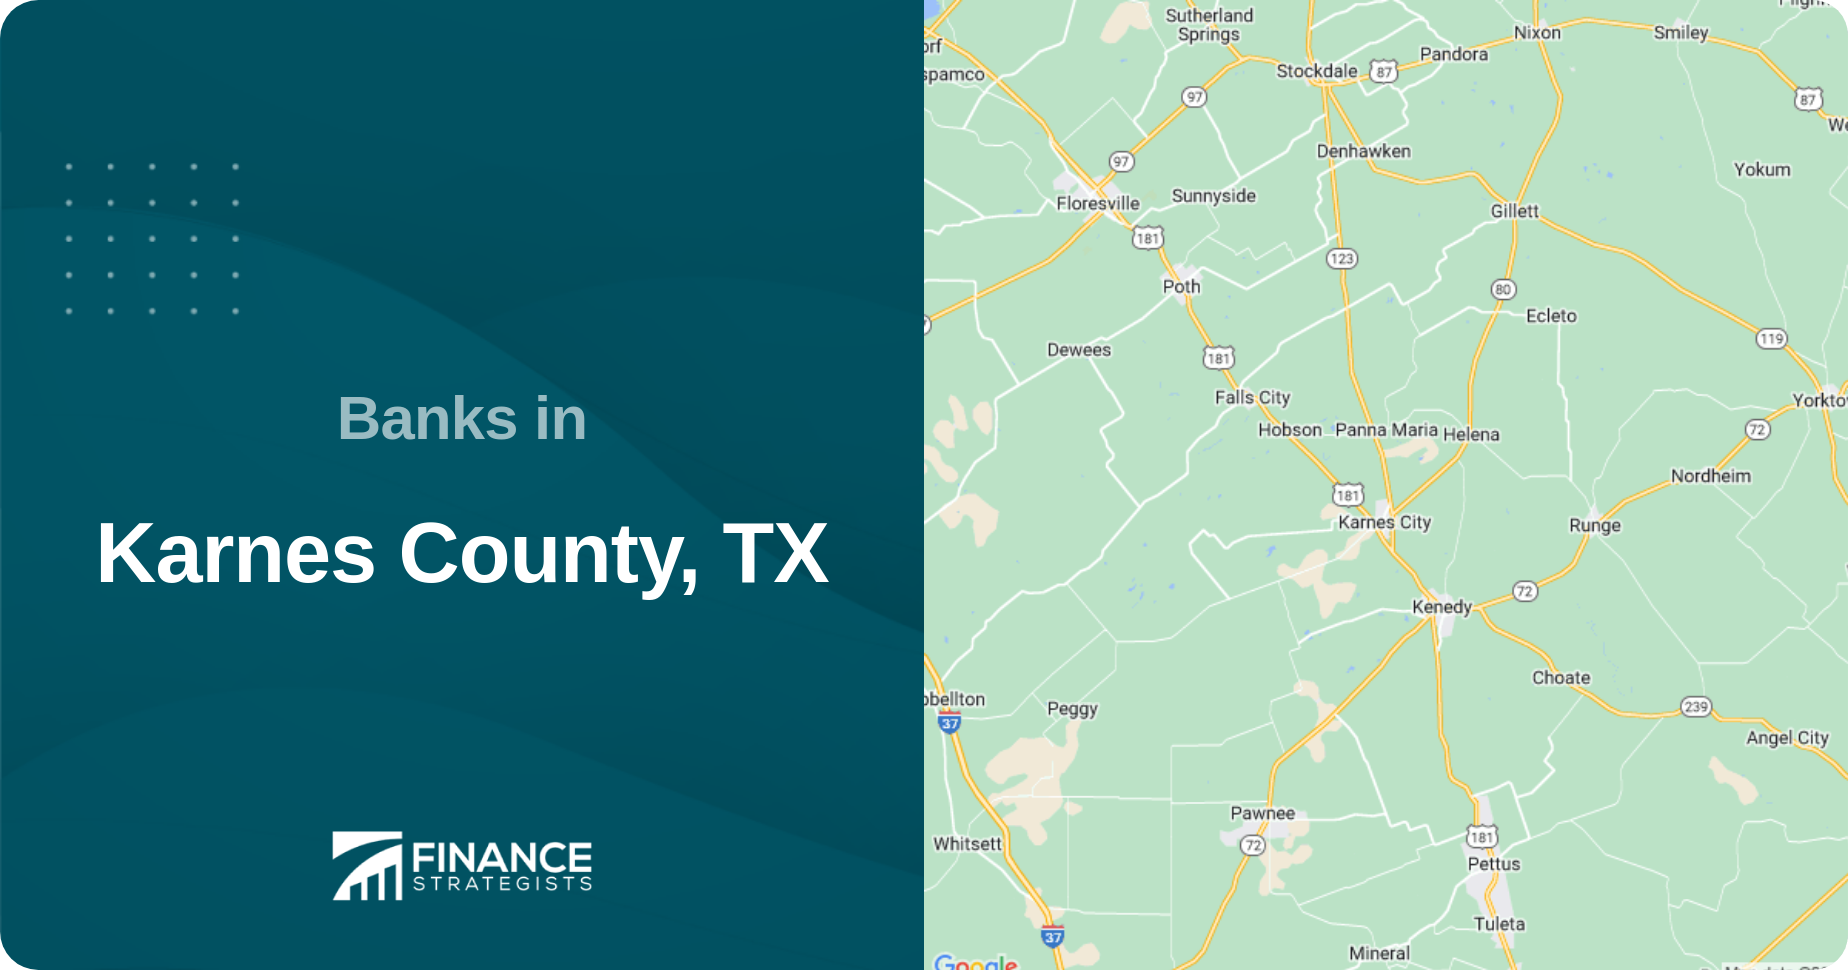 Banks in Karnes County, TX